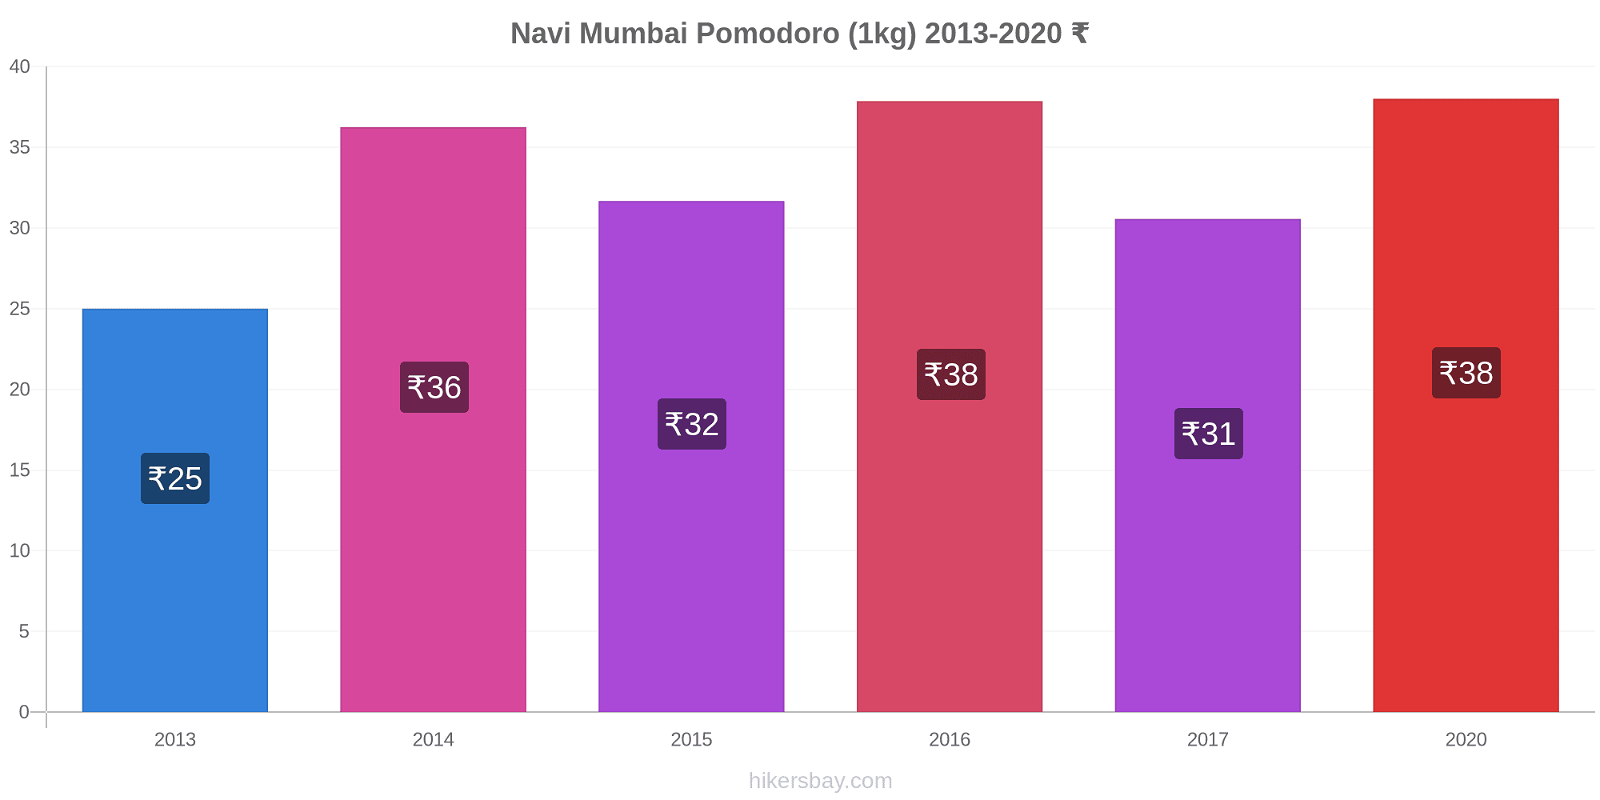 Navi Mumbai variazioni di prezzo Pomodoro (1kg) hikersbay.com